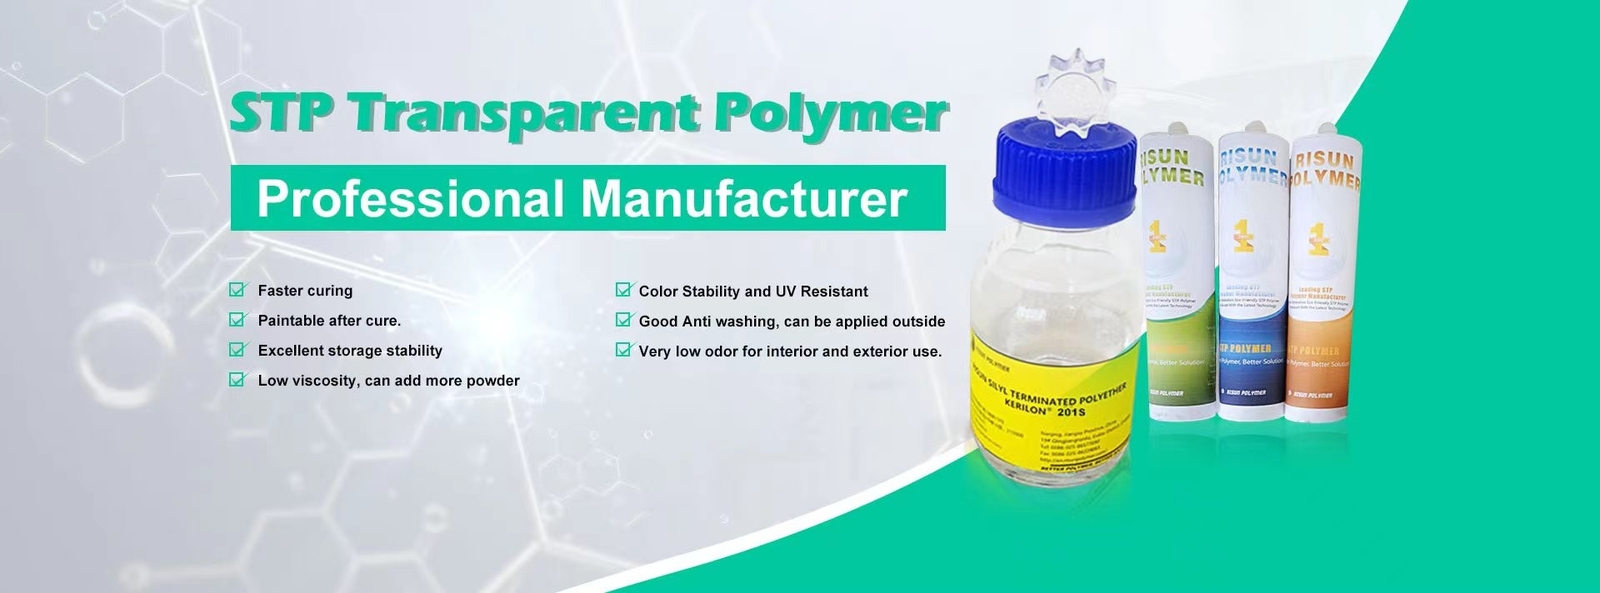 qualidade Polímero alterado Silane fábrica